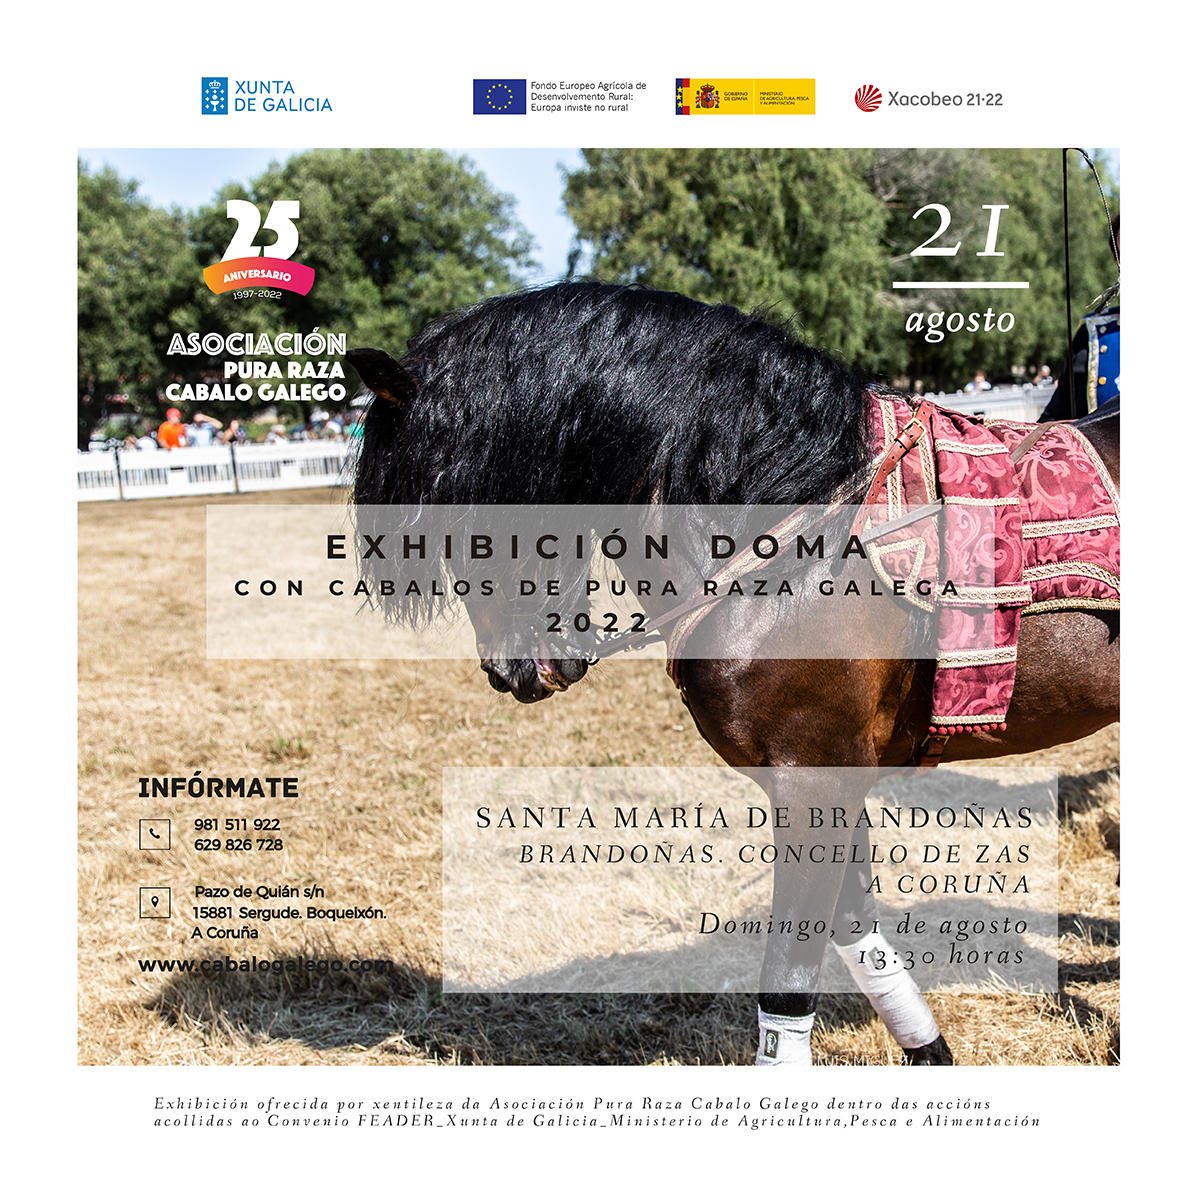 Exhibición de Doma con cabalos de pura raza galega Santa María de Brandoñas.